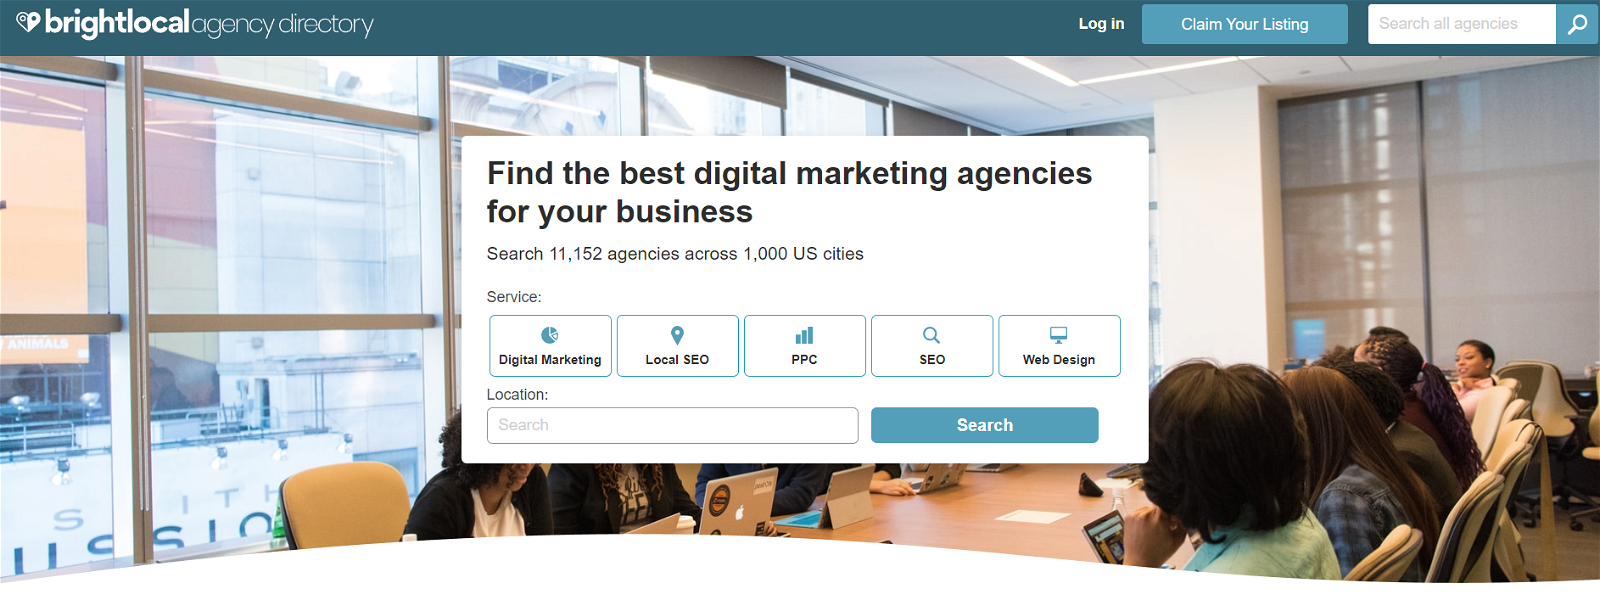 finding digital marketing agencies